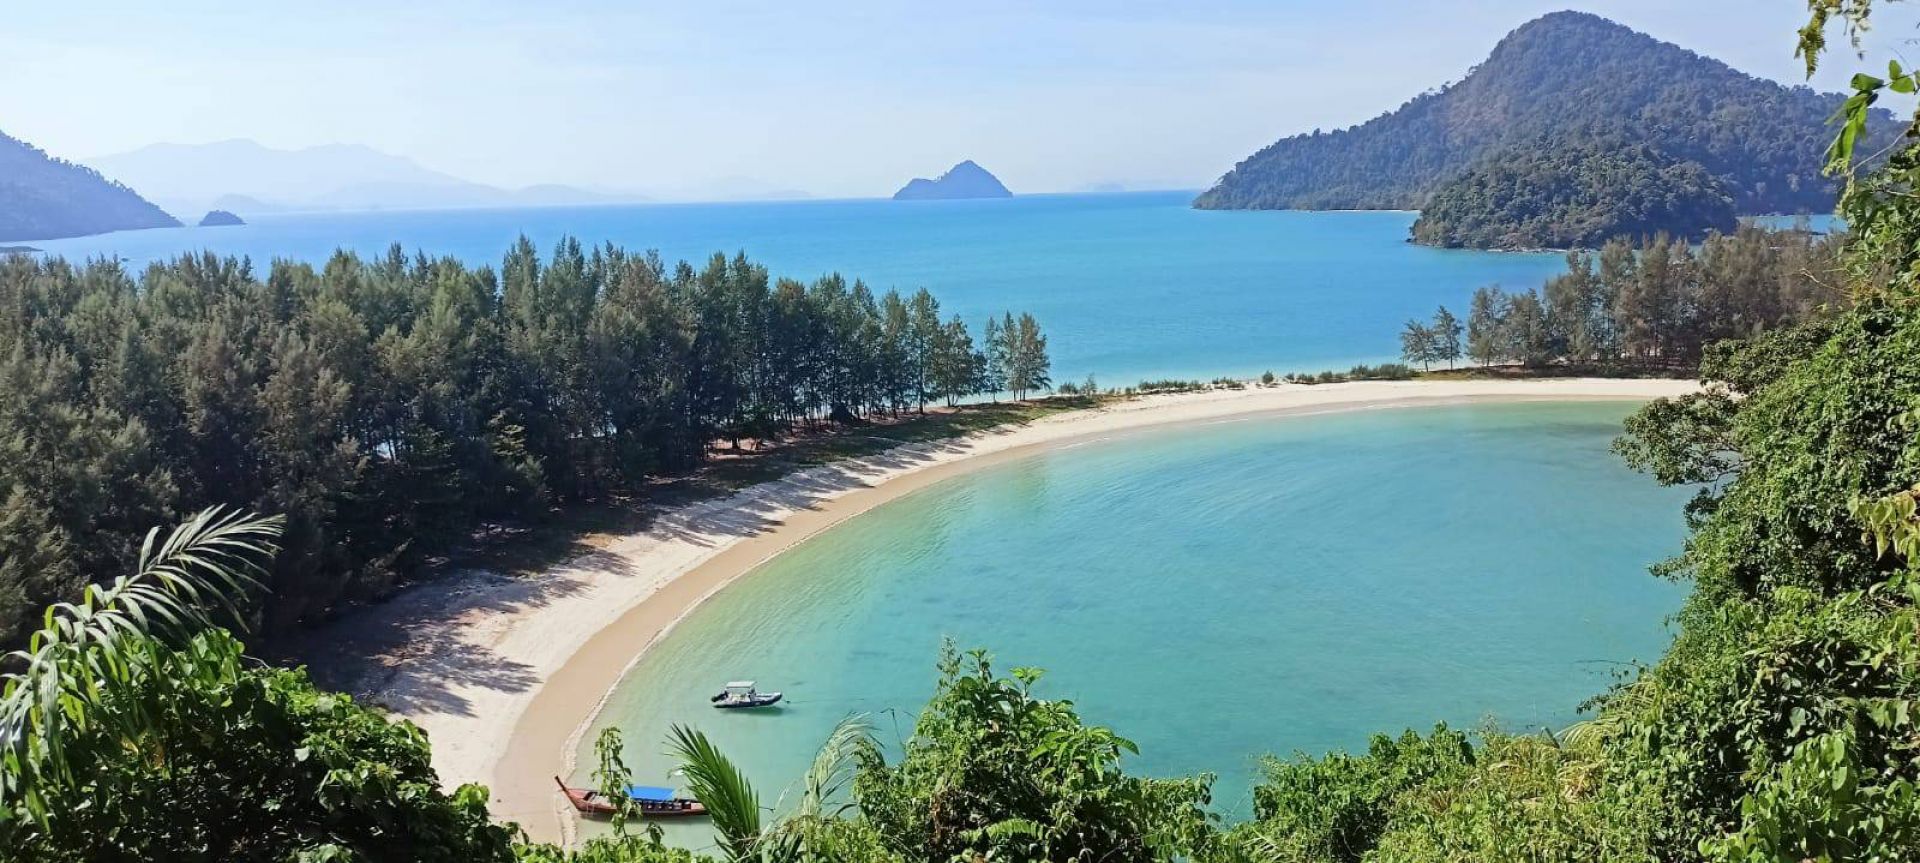 Photo of Bang Ben Beach - popular place among relax connoisseurs